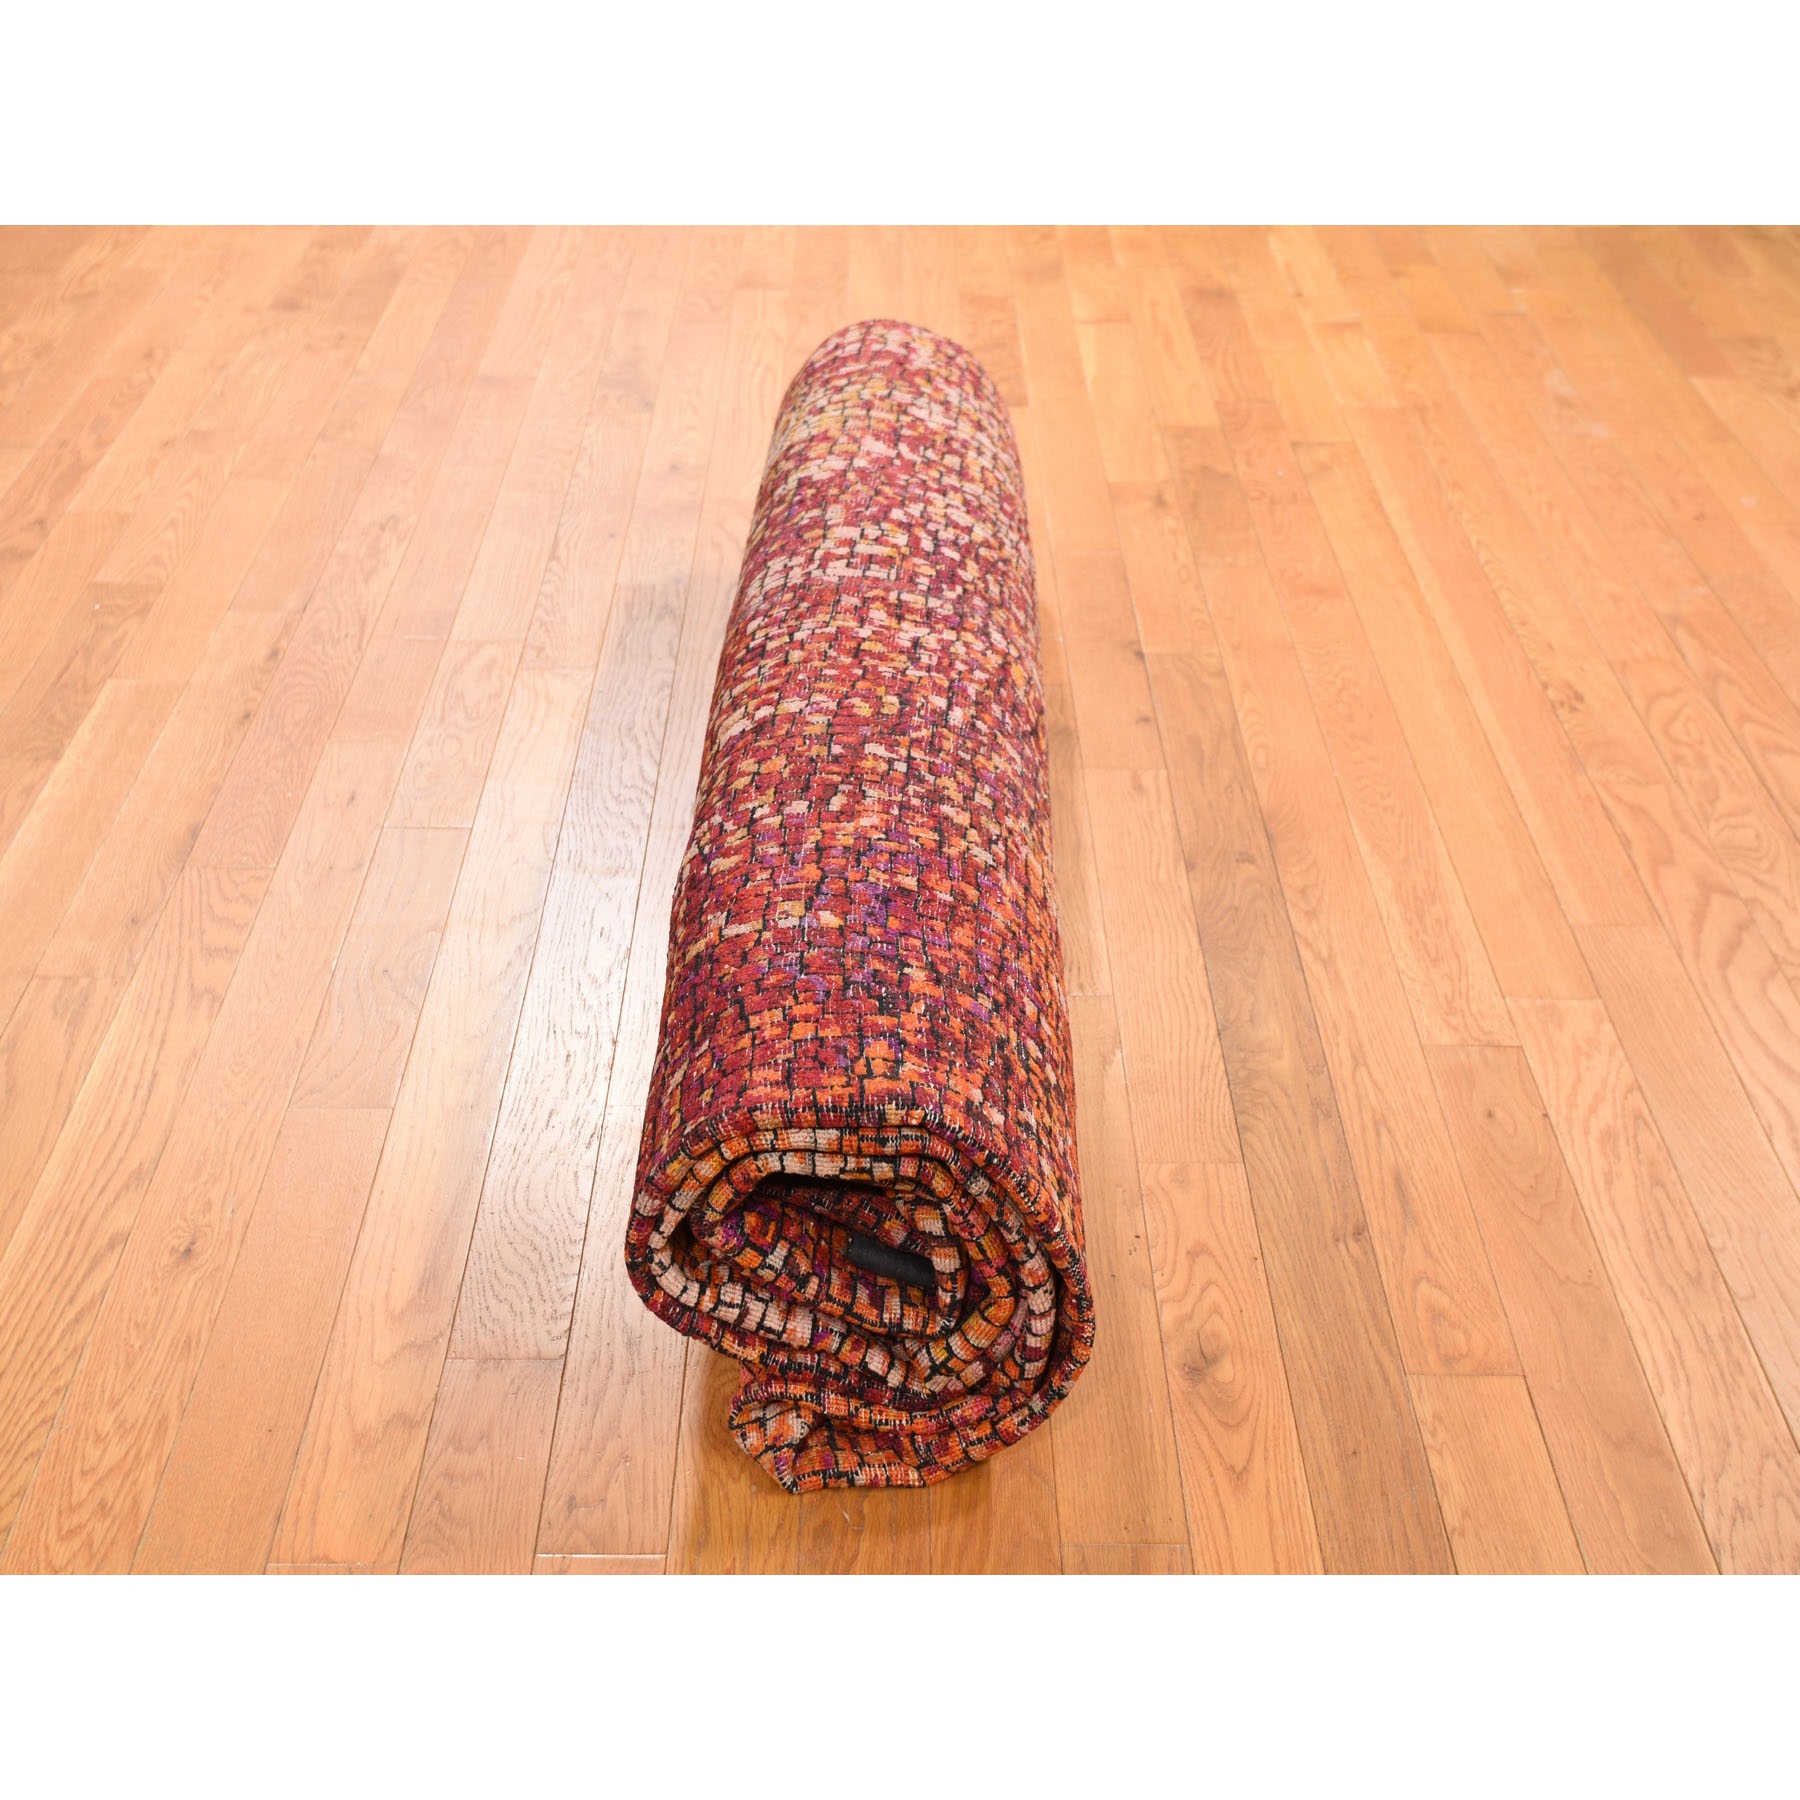 8-10 x12- Burnt Orange Mosaic Design Silk With Textured Wool Hand Knotted Oriental Rug 